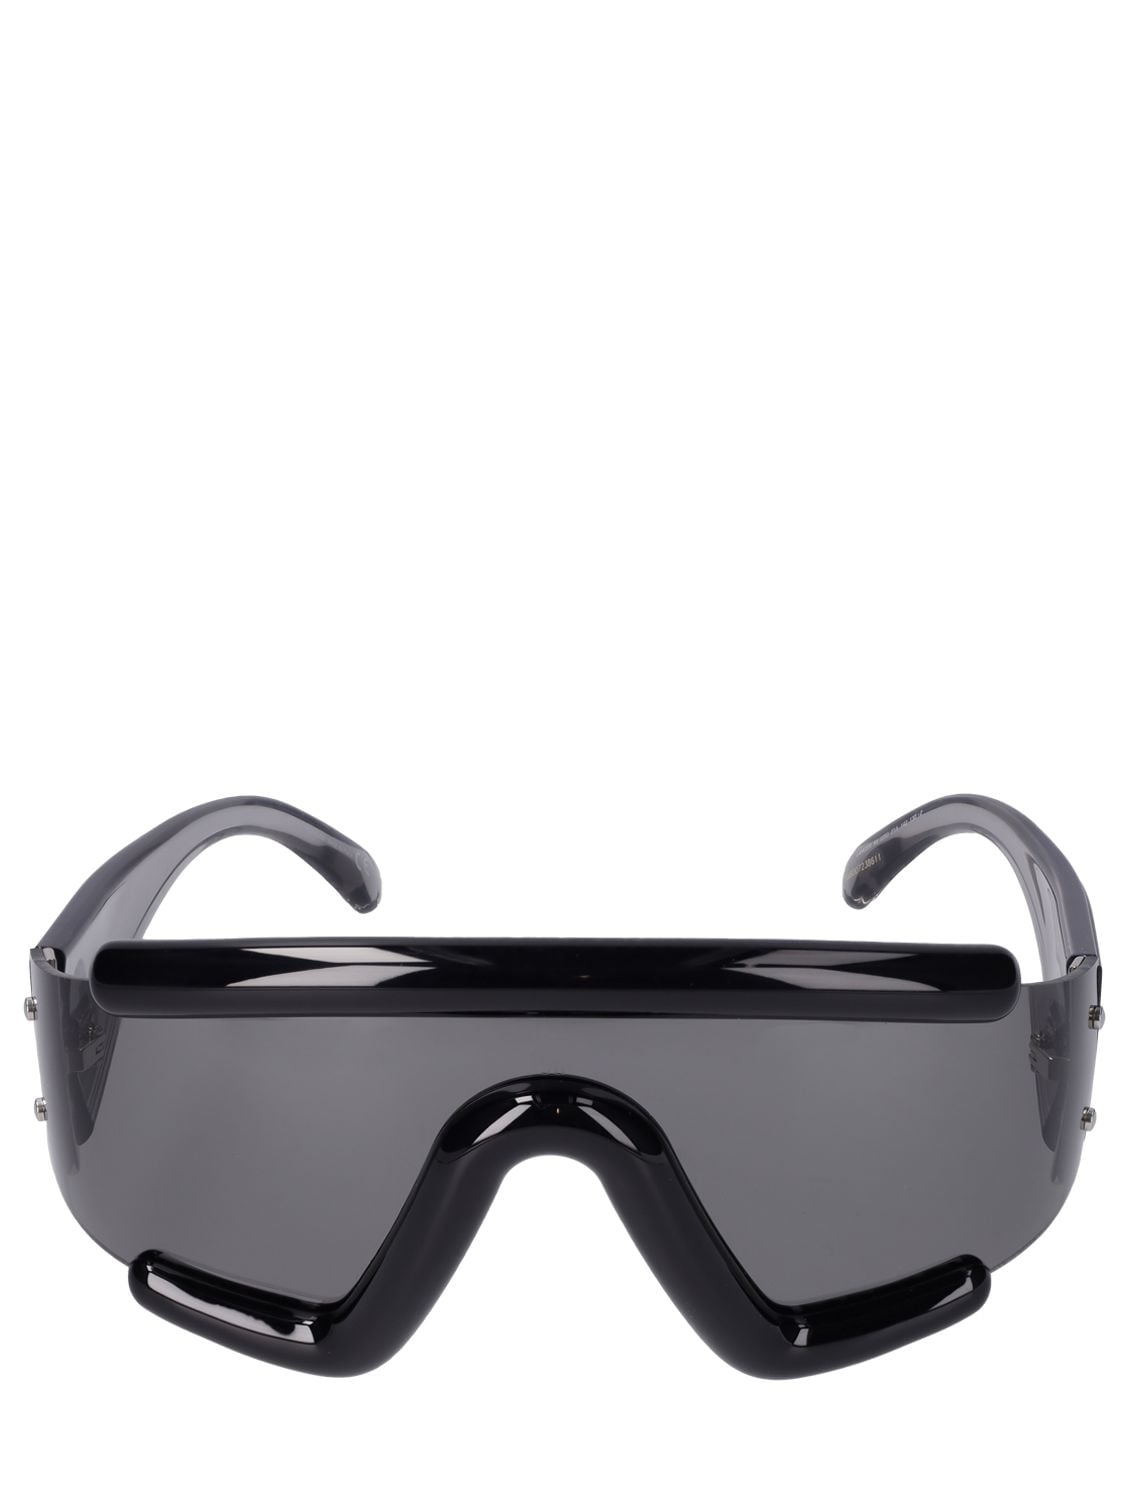 Image of Lancer Sunglasses